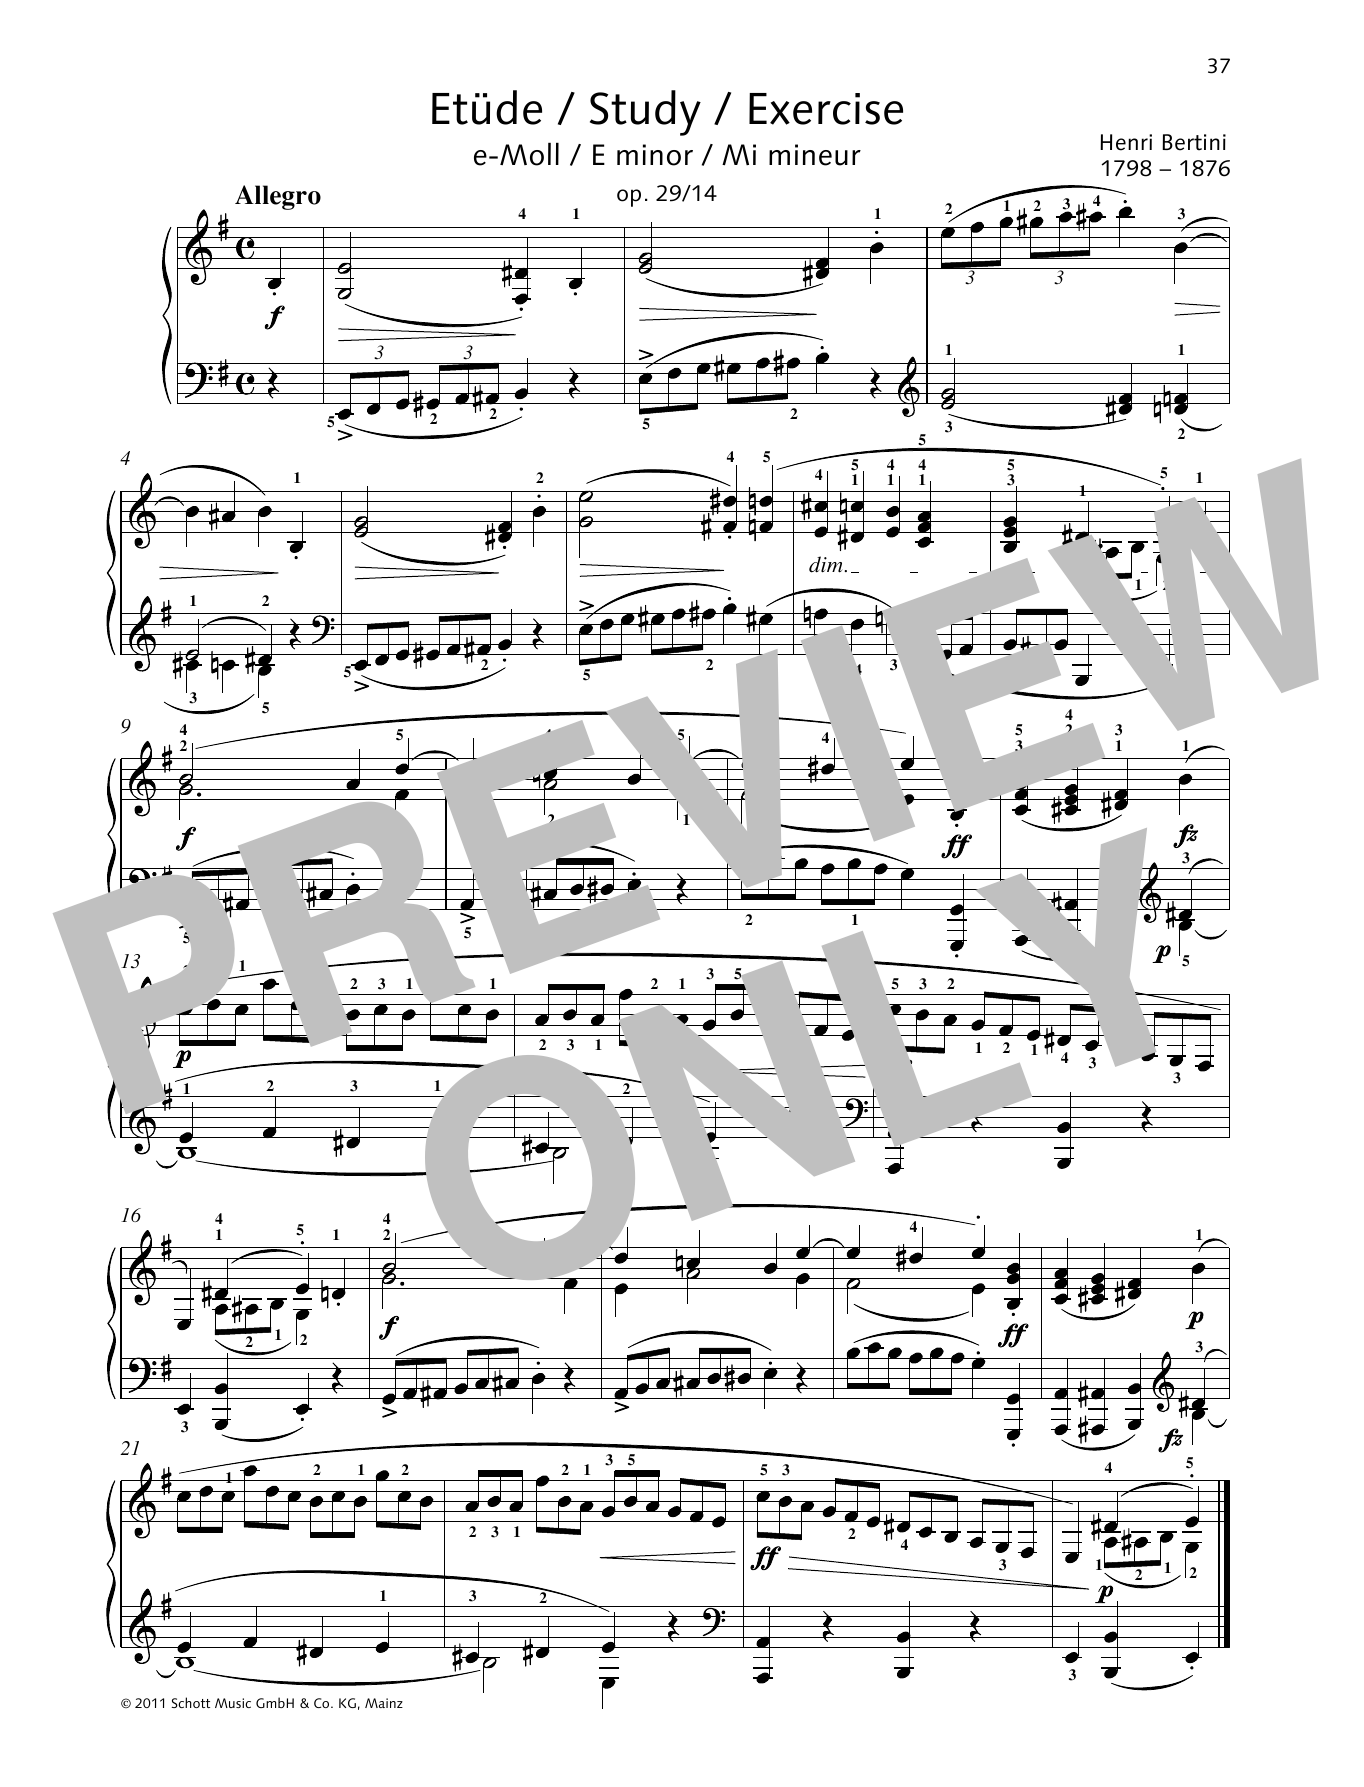 Henri Bertini Study E minor Sheet Music Notes & Chords for Piano Solo - Download or Print PDF